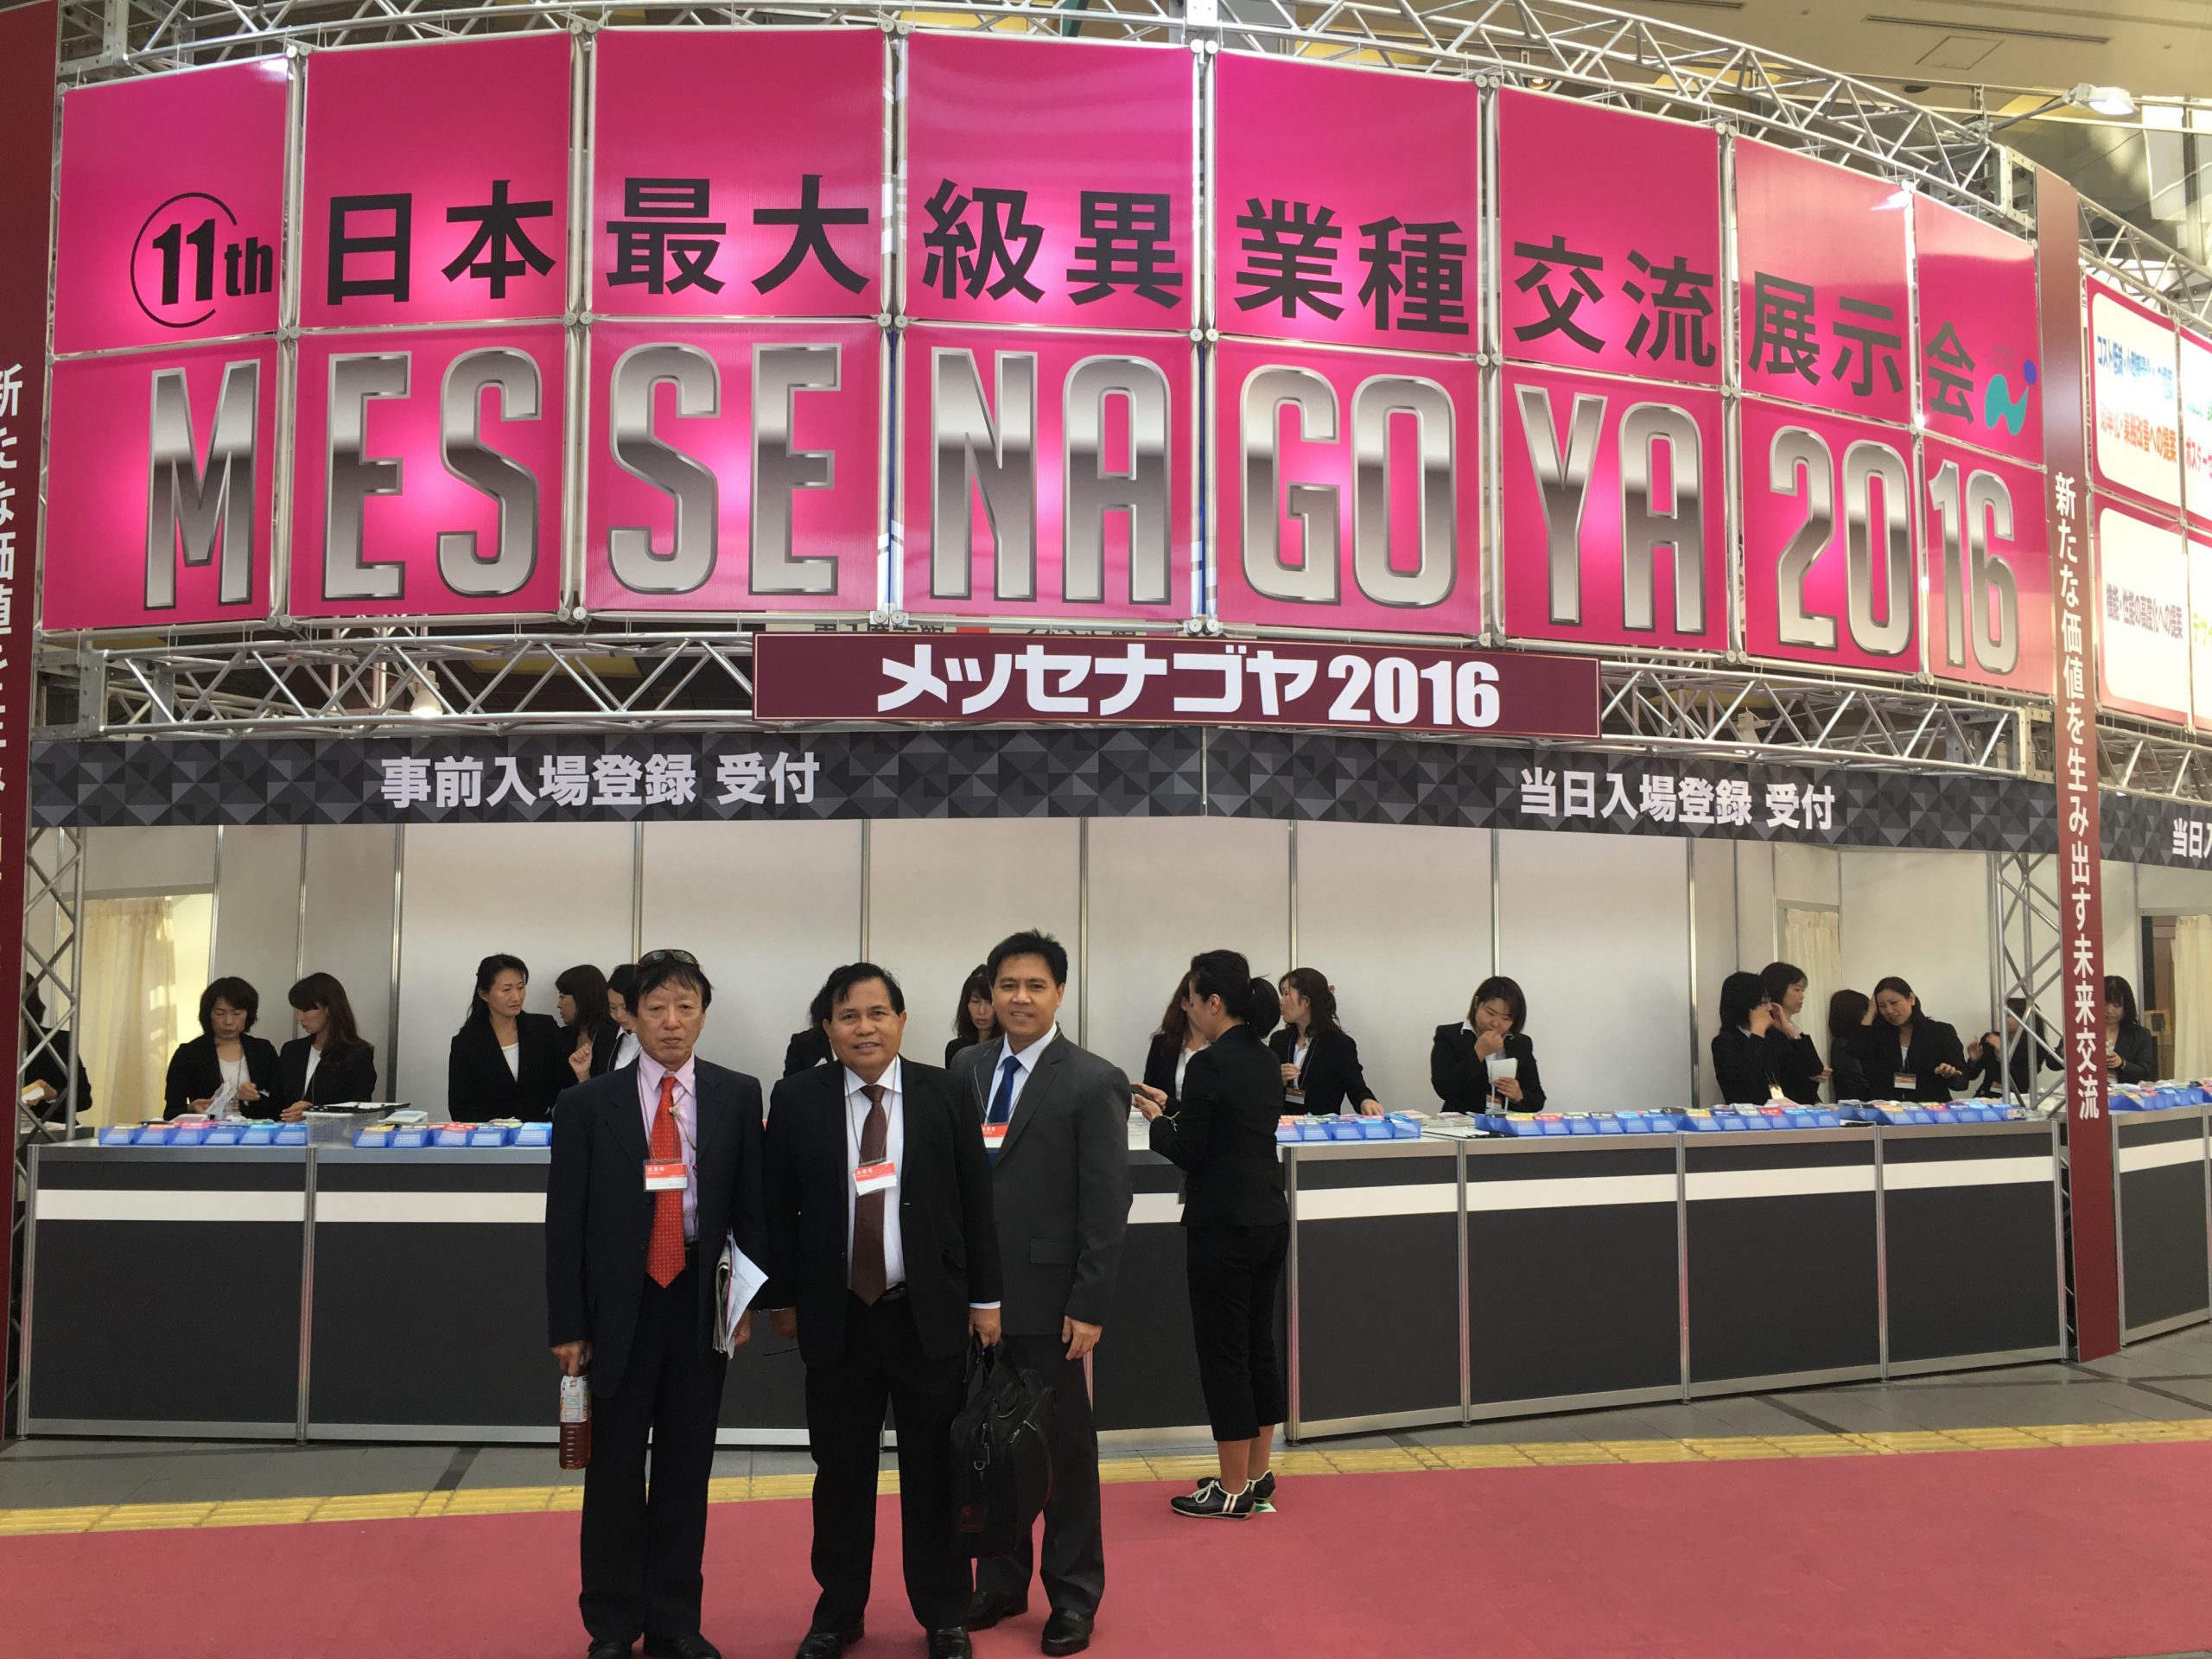 SPPI Joins Messe Nagoya 2016